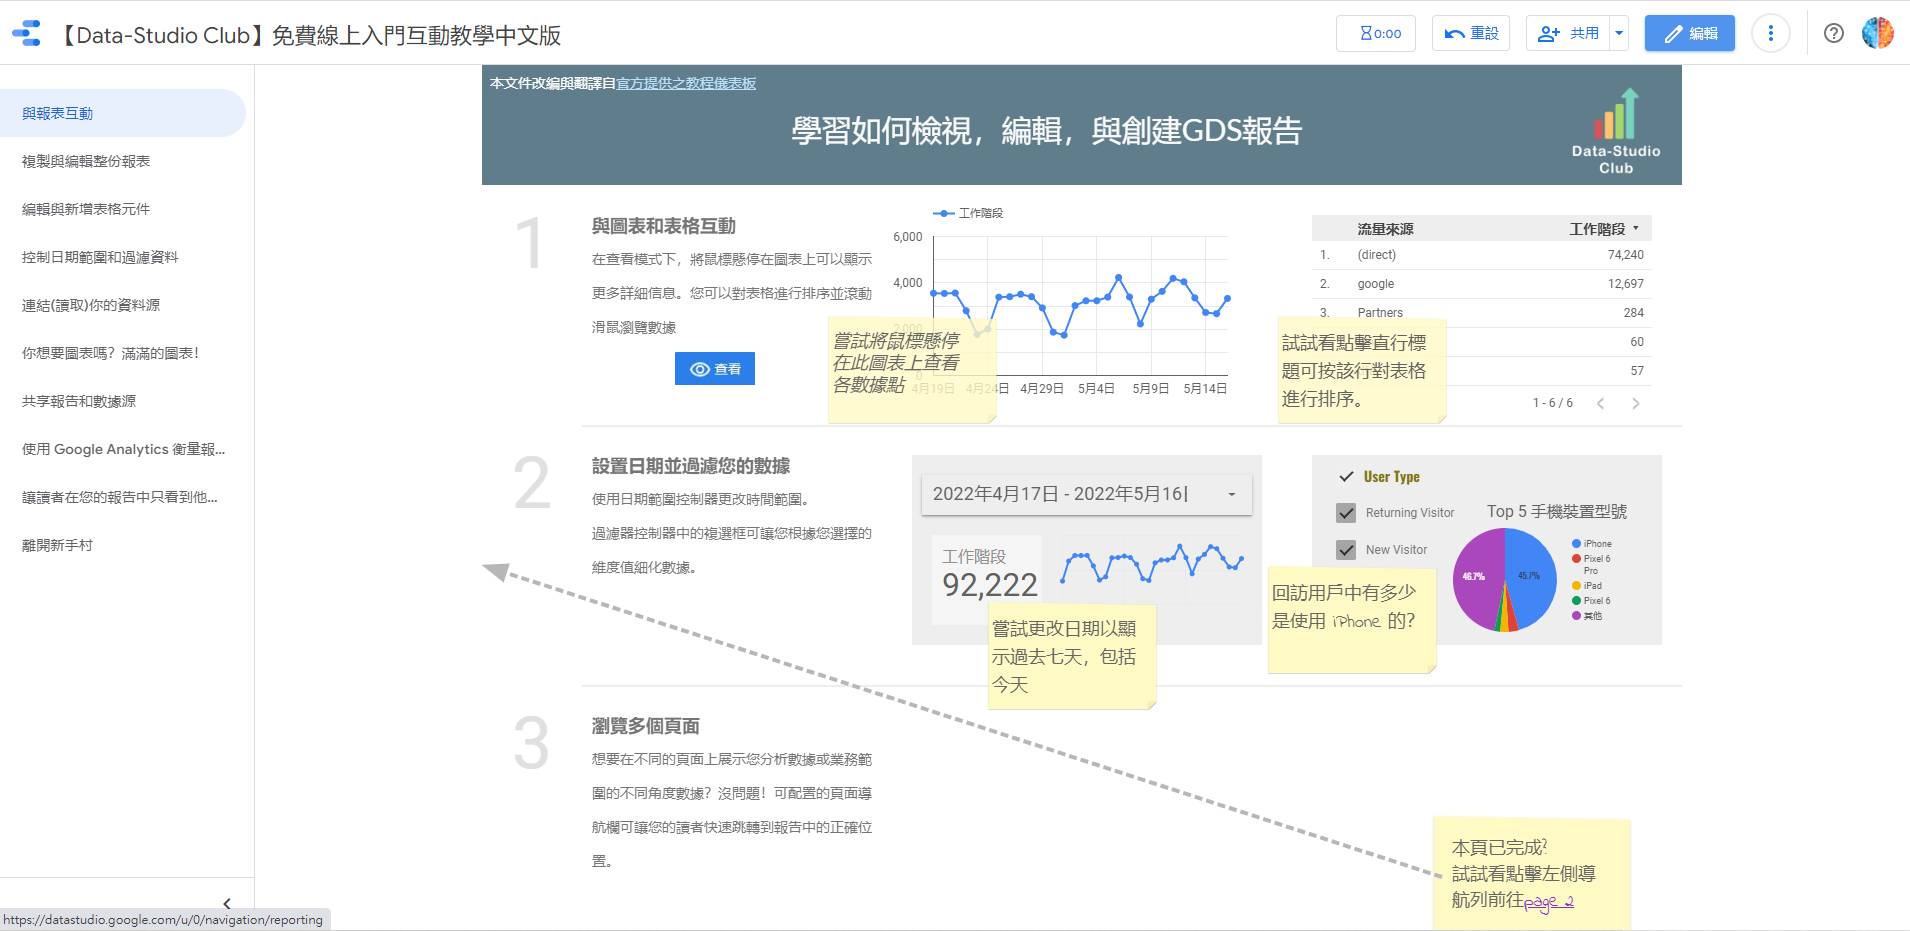 Google Data Studio online course chinese version-1